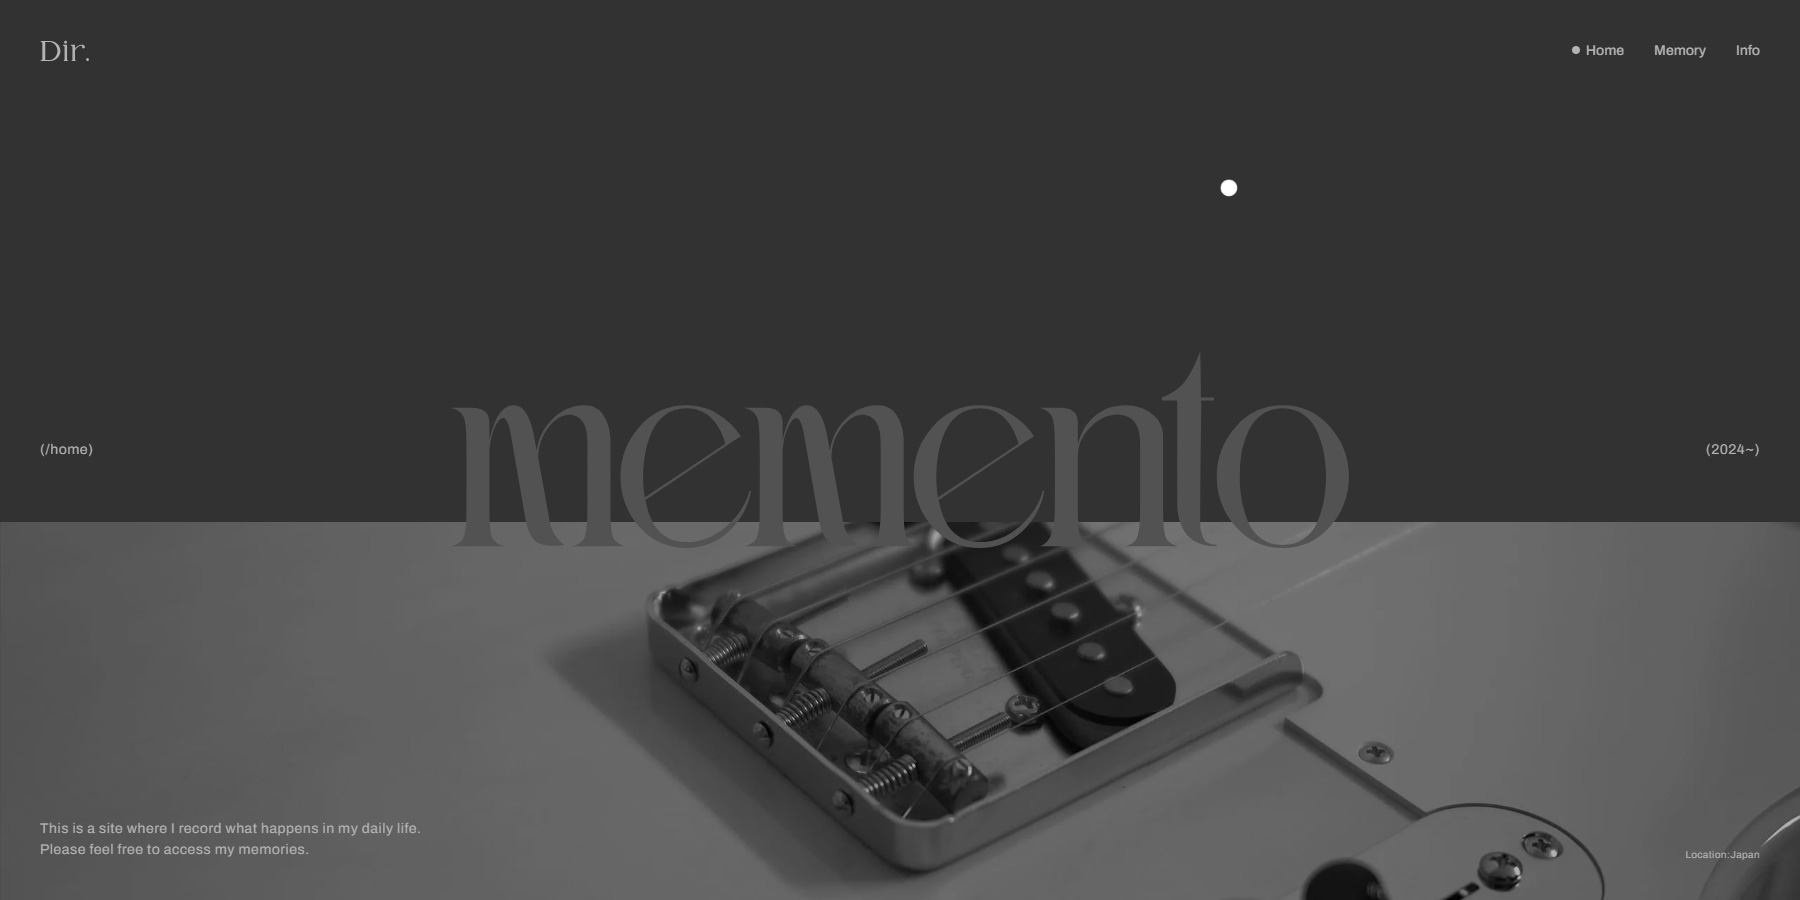 MemoryDir. - Website of the Day